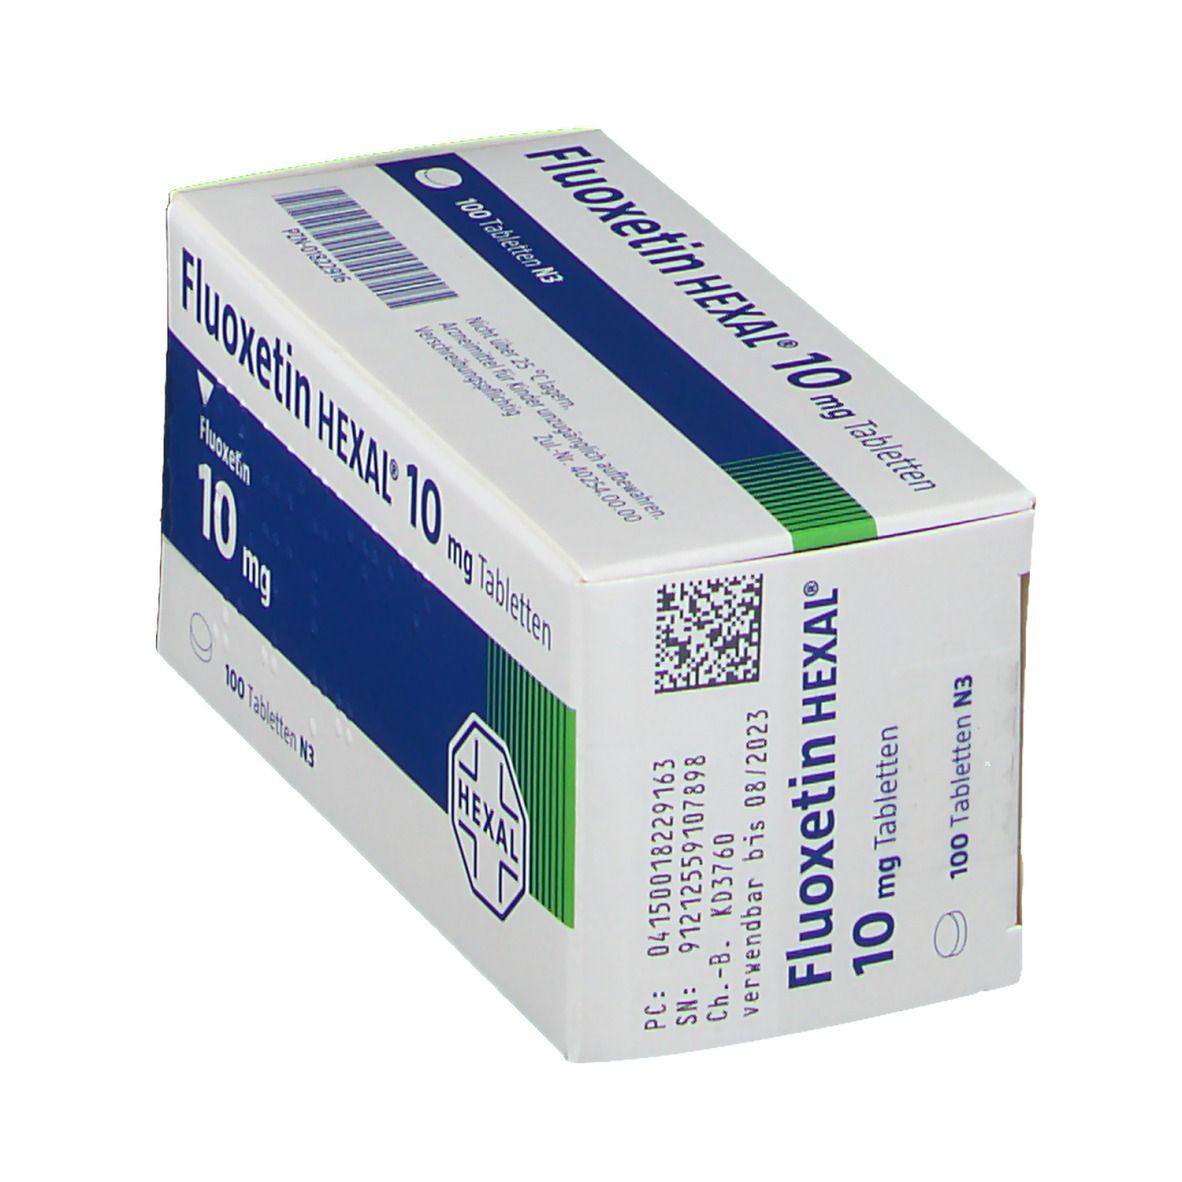 Fluoxetin HEXAL® 10 mg